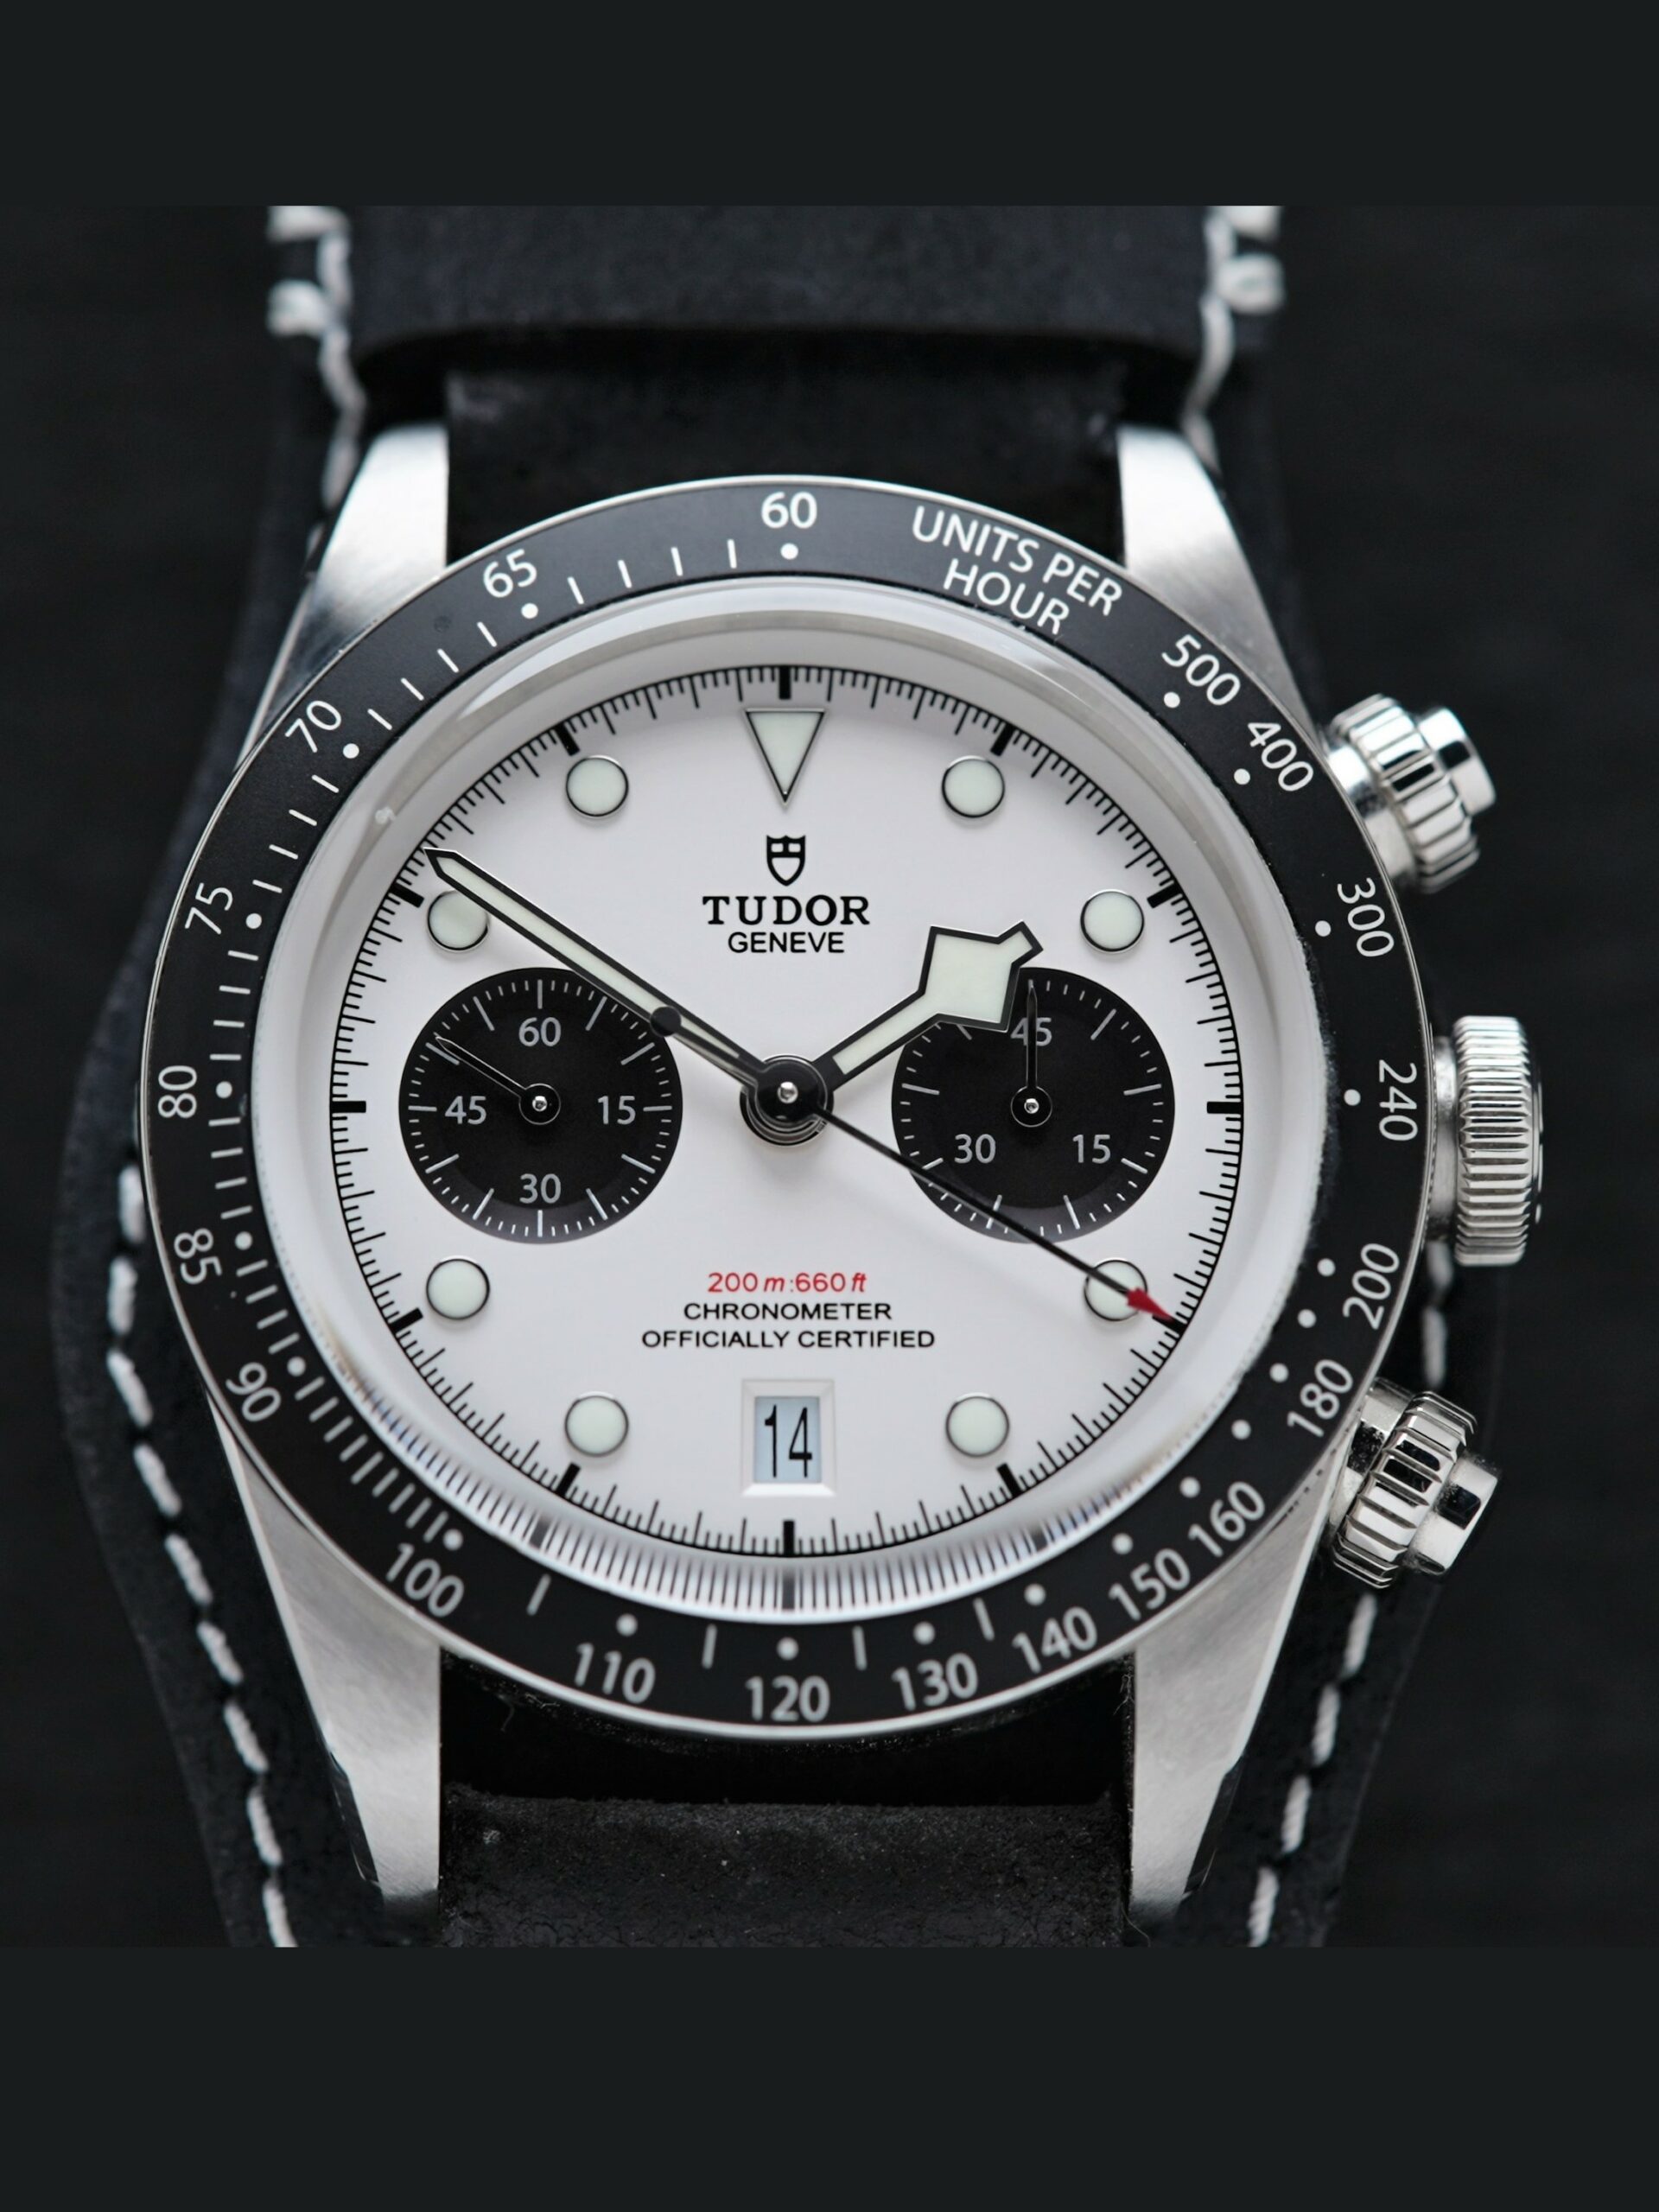 Tudor Black Bay Chrono Dial Chronograph 79360 M79360 Black Bay watch featured under white lighting.